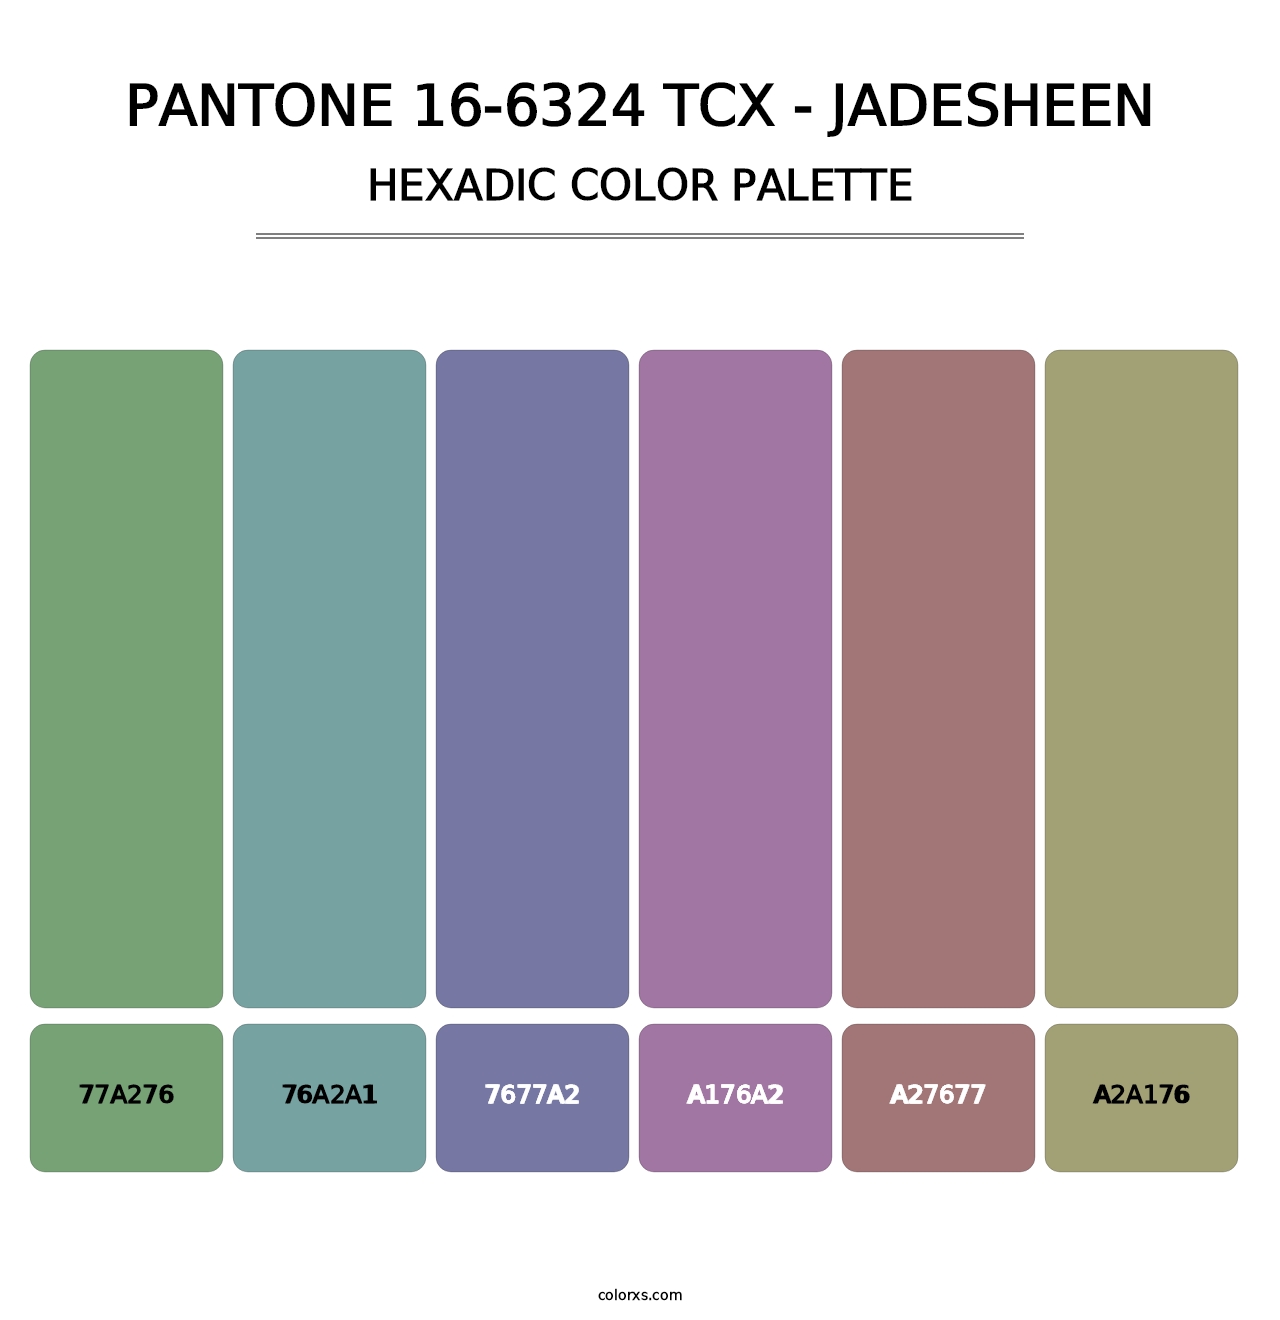 PANTONE 16-6324 TCX - Jadesheen - Hexadic Color Palette